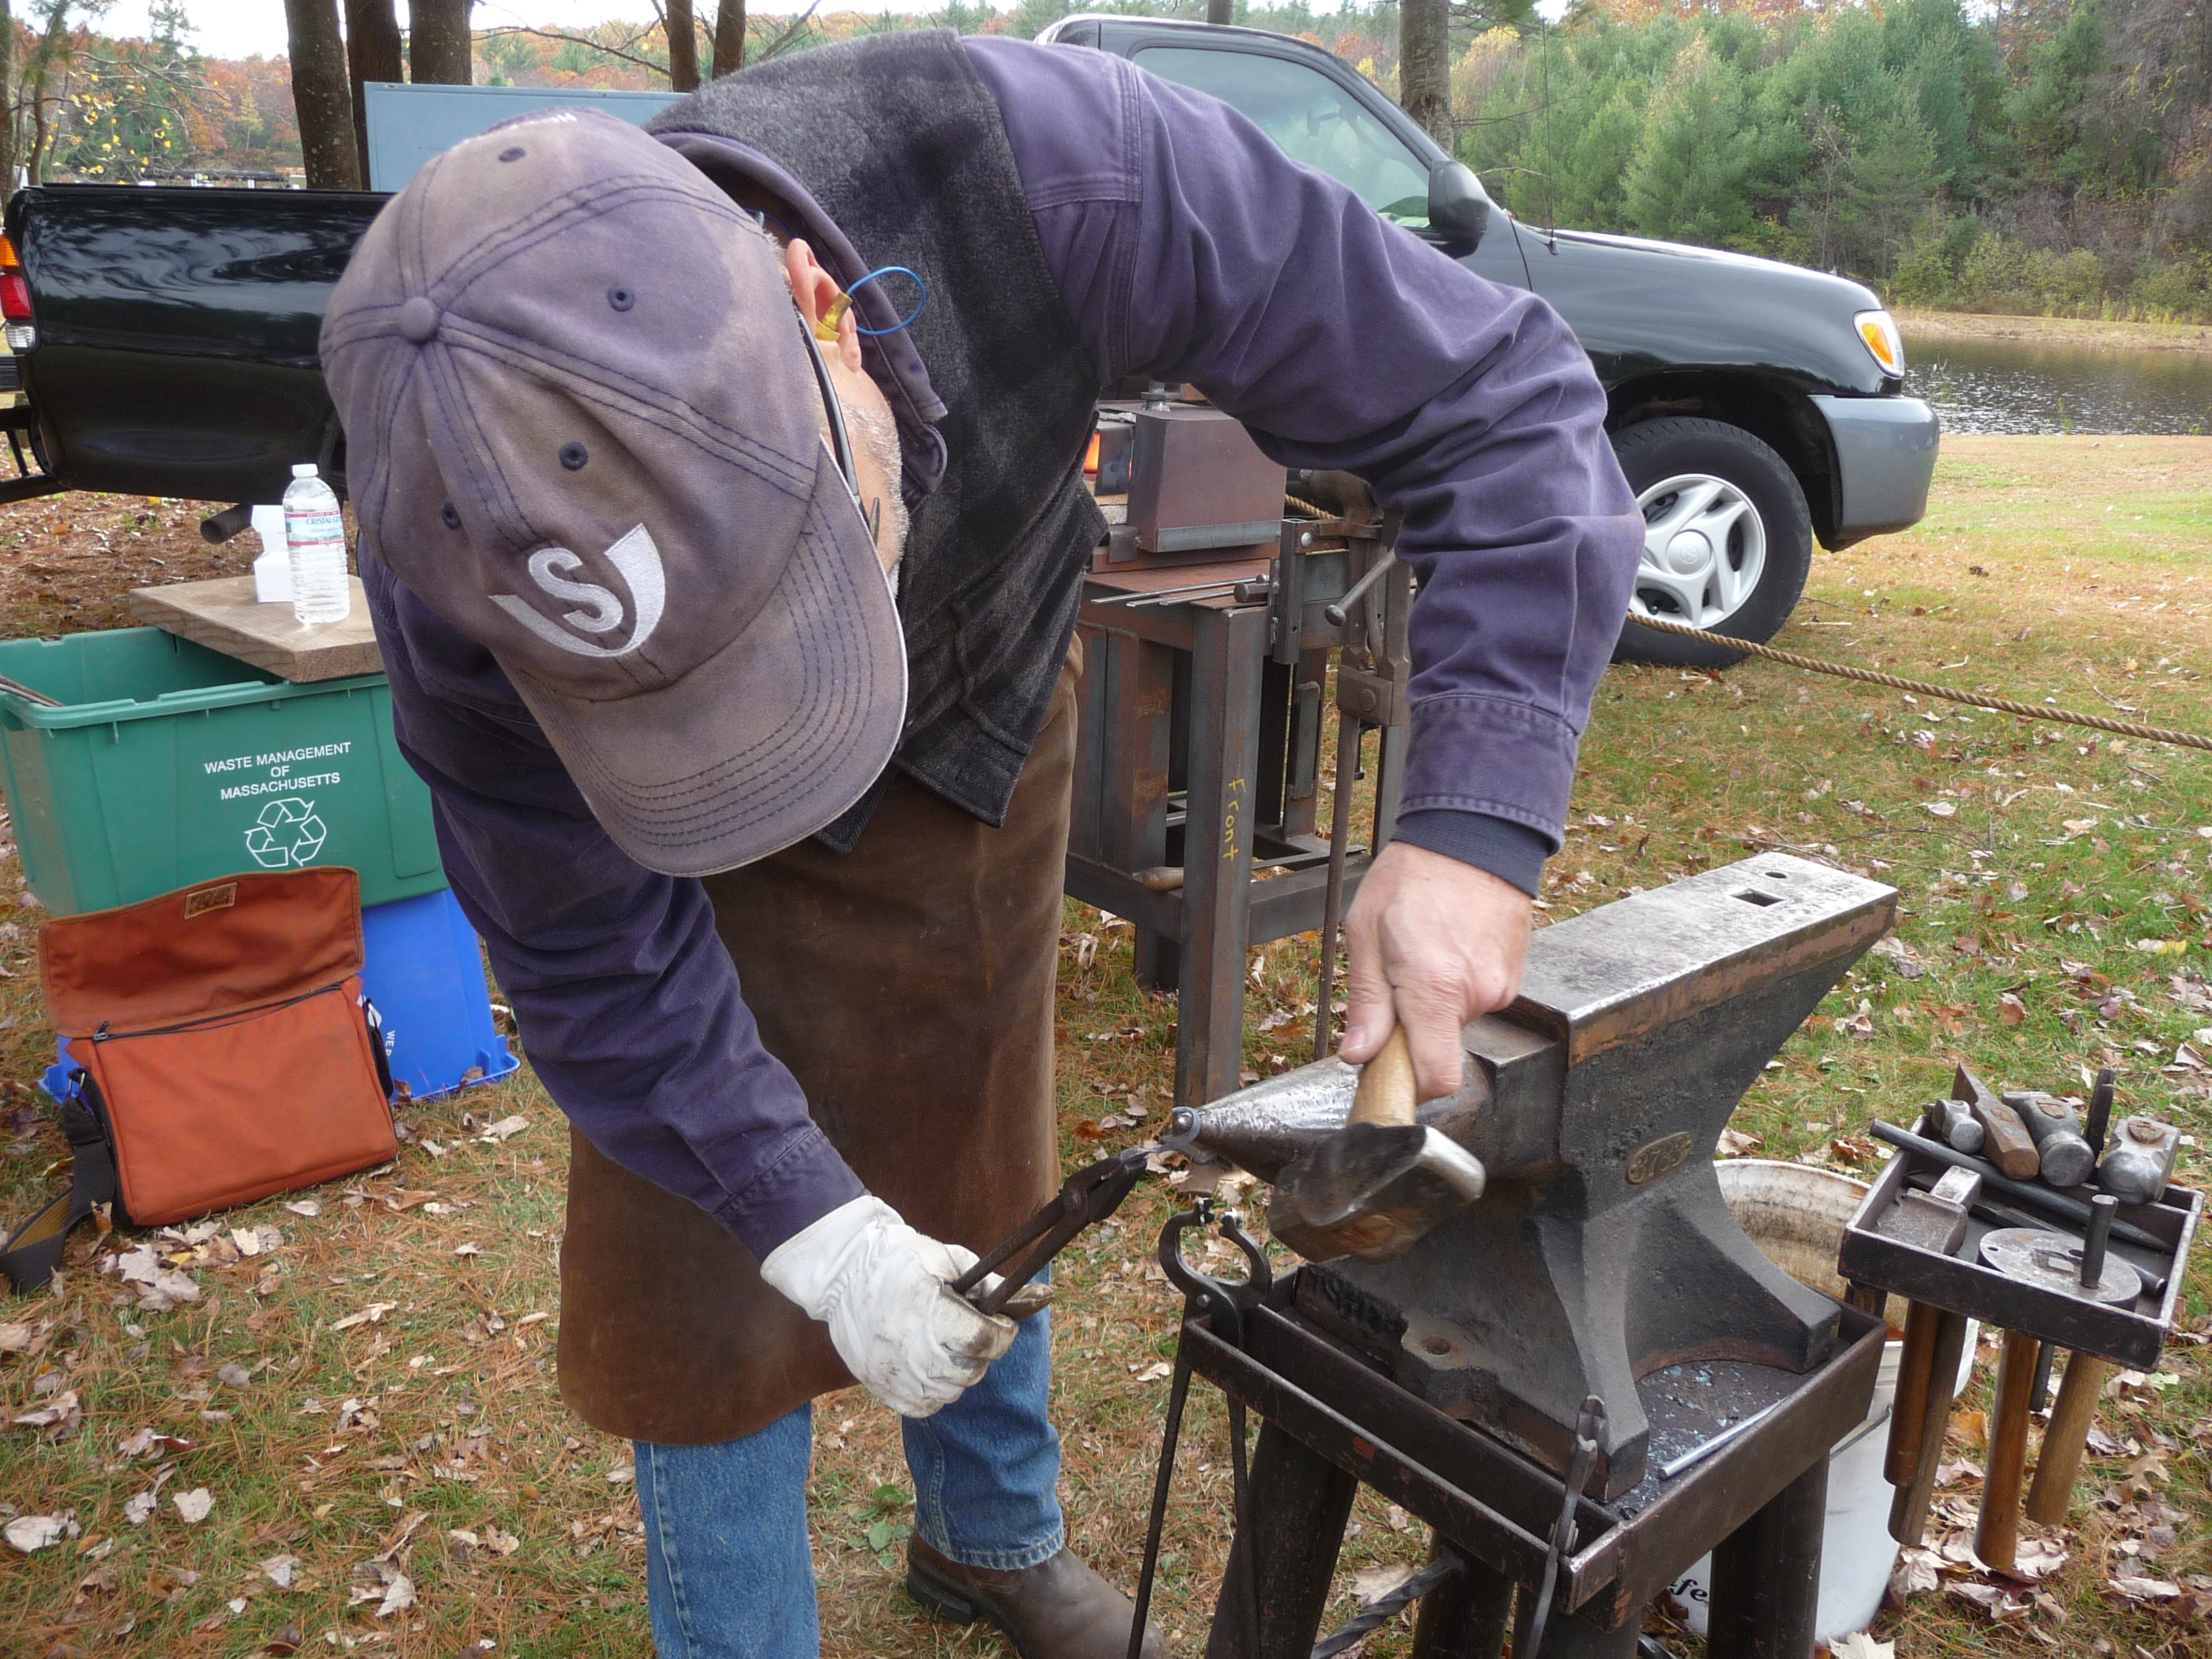 Ray Ciemny, an artisan and blacksmith, demos his craft